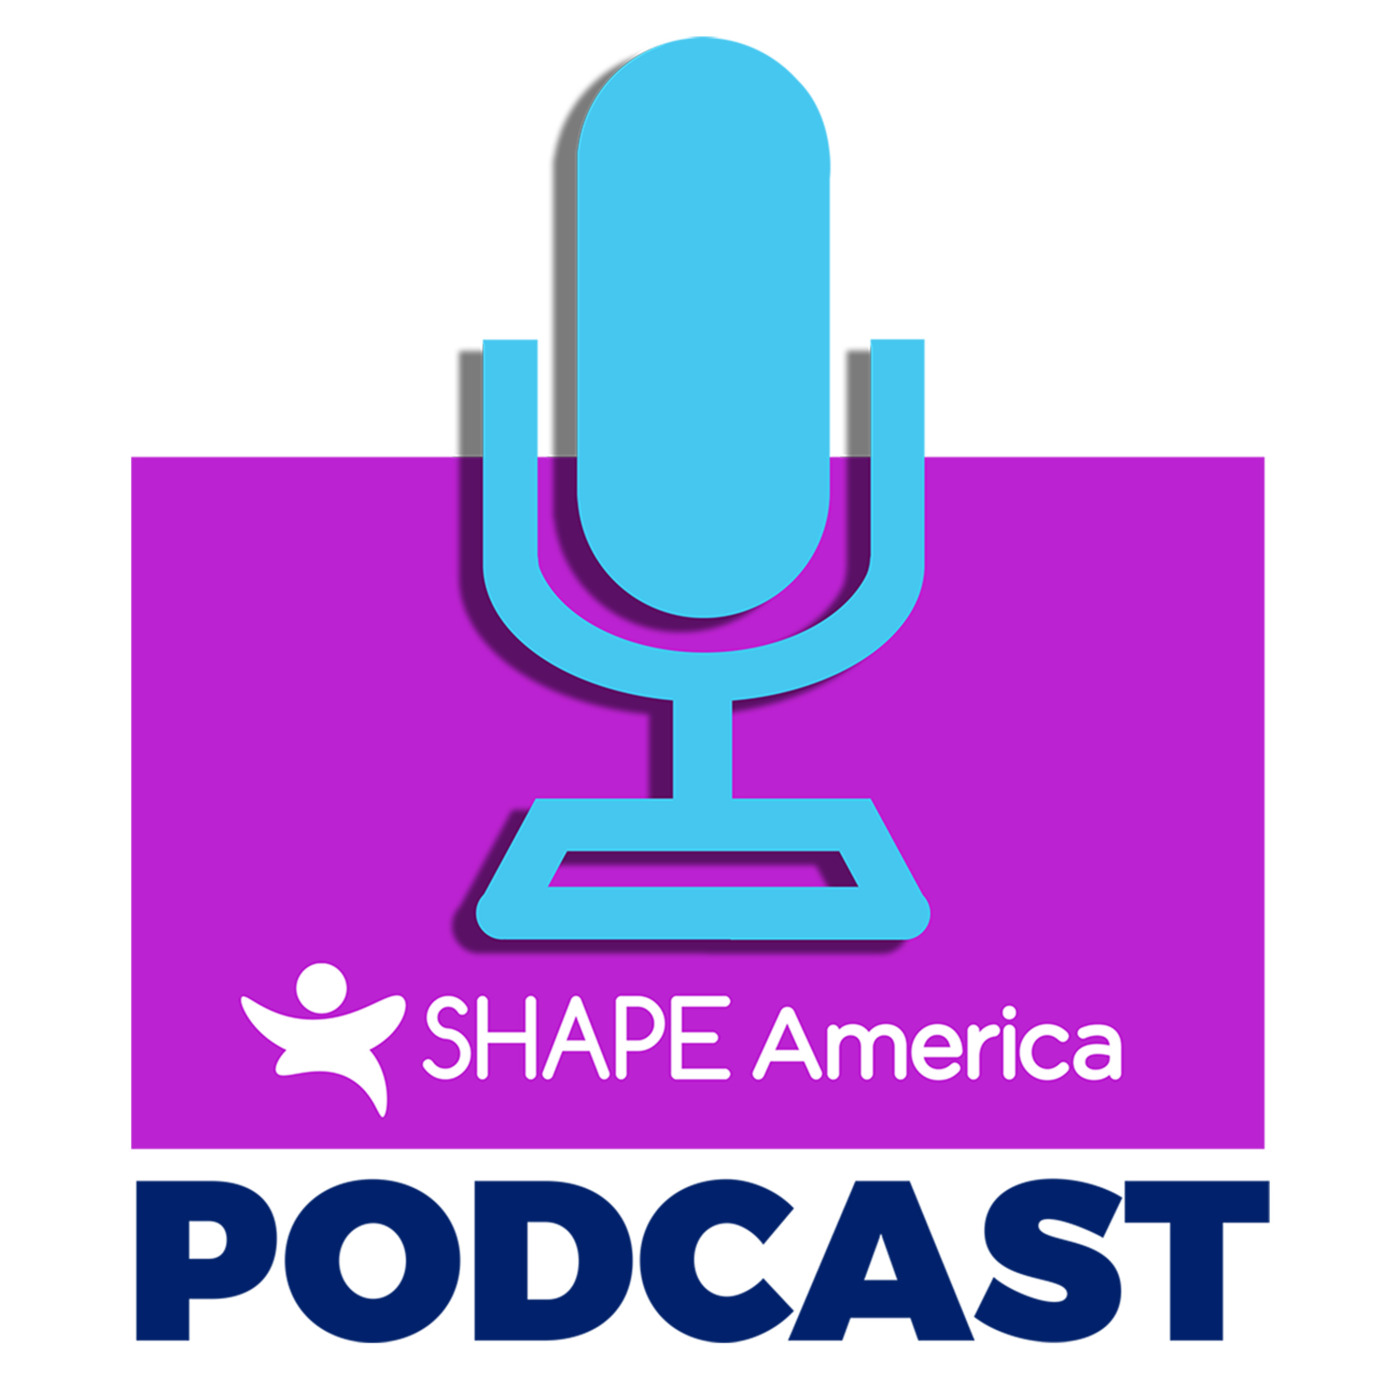 SHAPE America's Podcast - Professional Development for Health & Physical Education Teachers